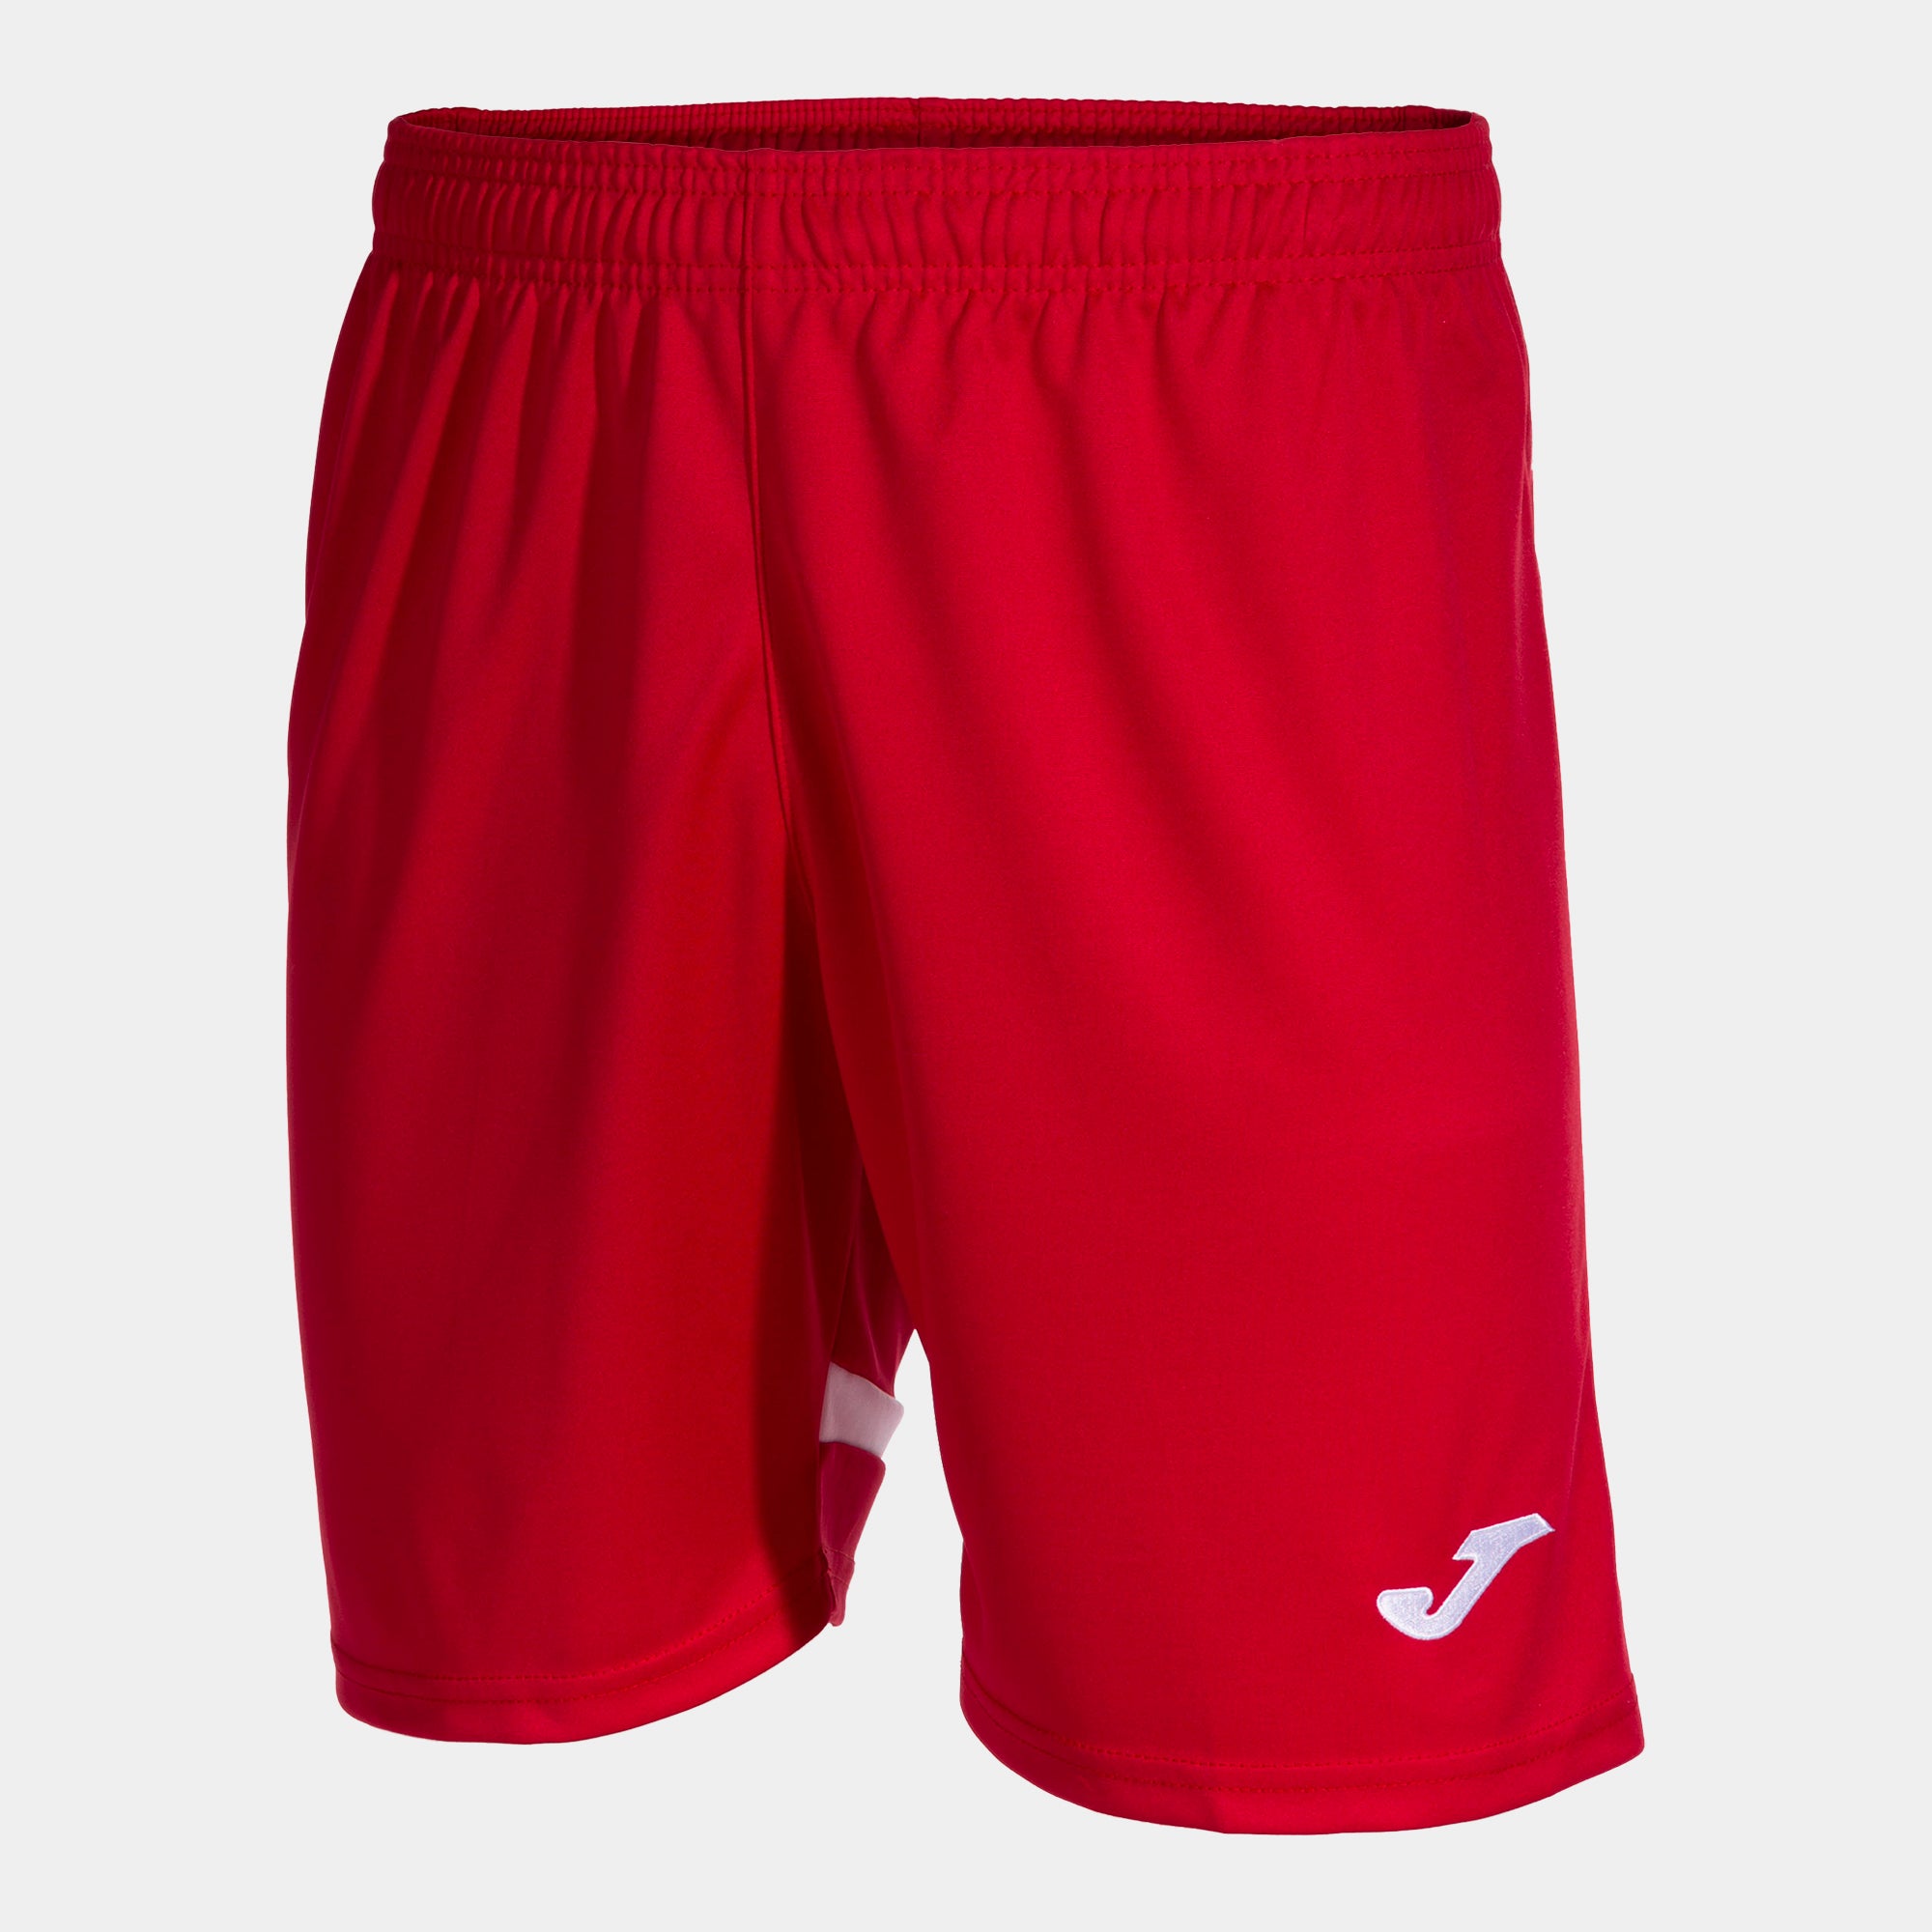 Joma Tokio Shorts - Red/White